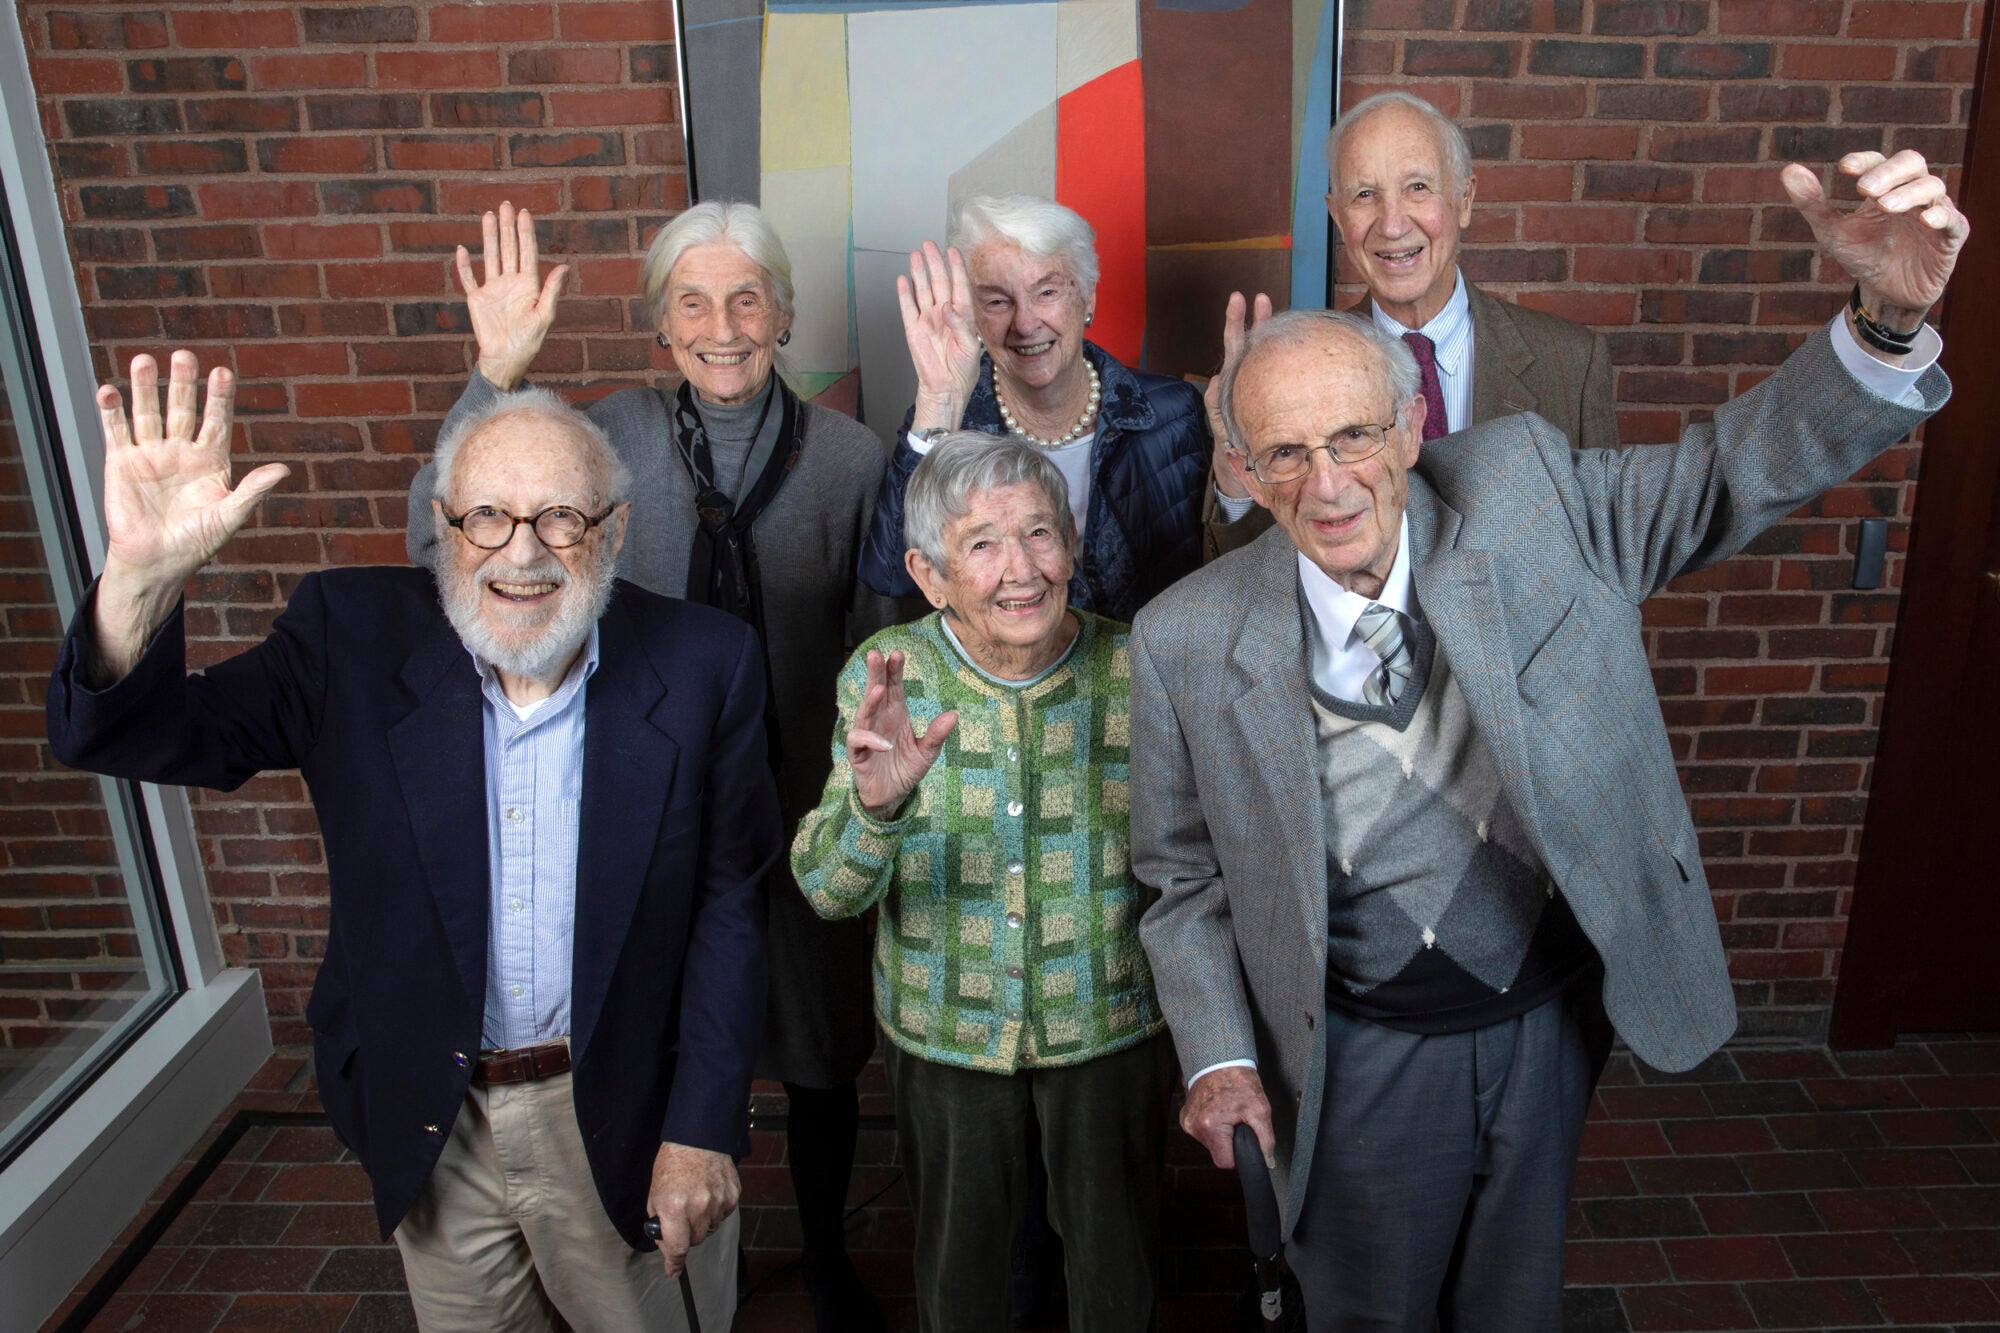 A group of six older folks wave